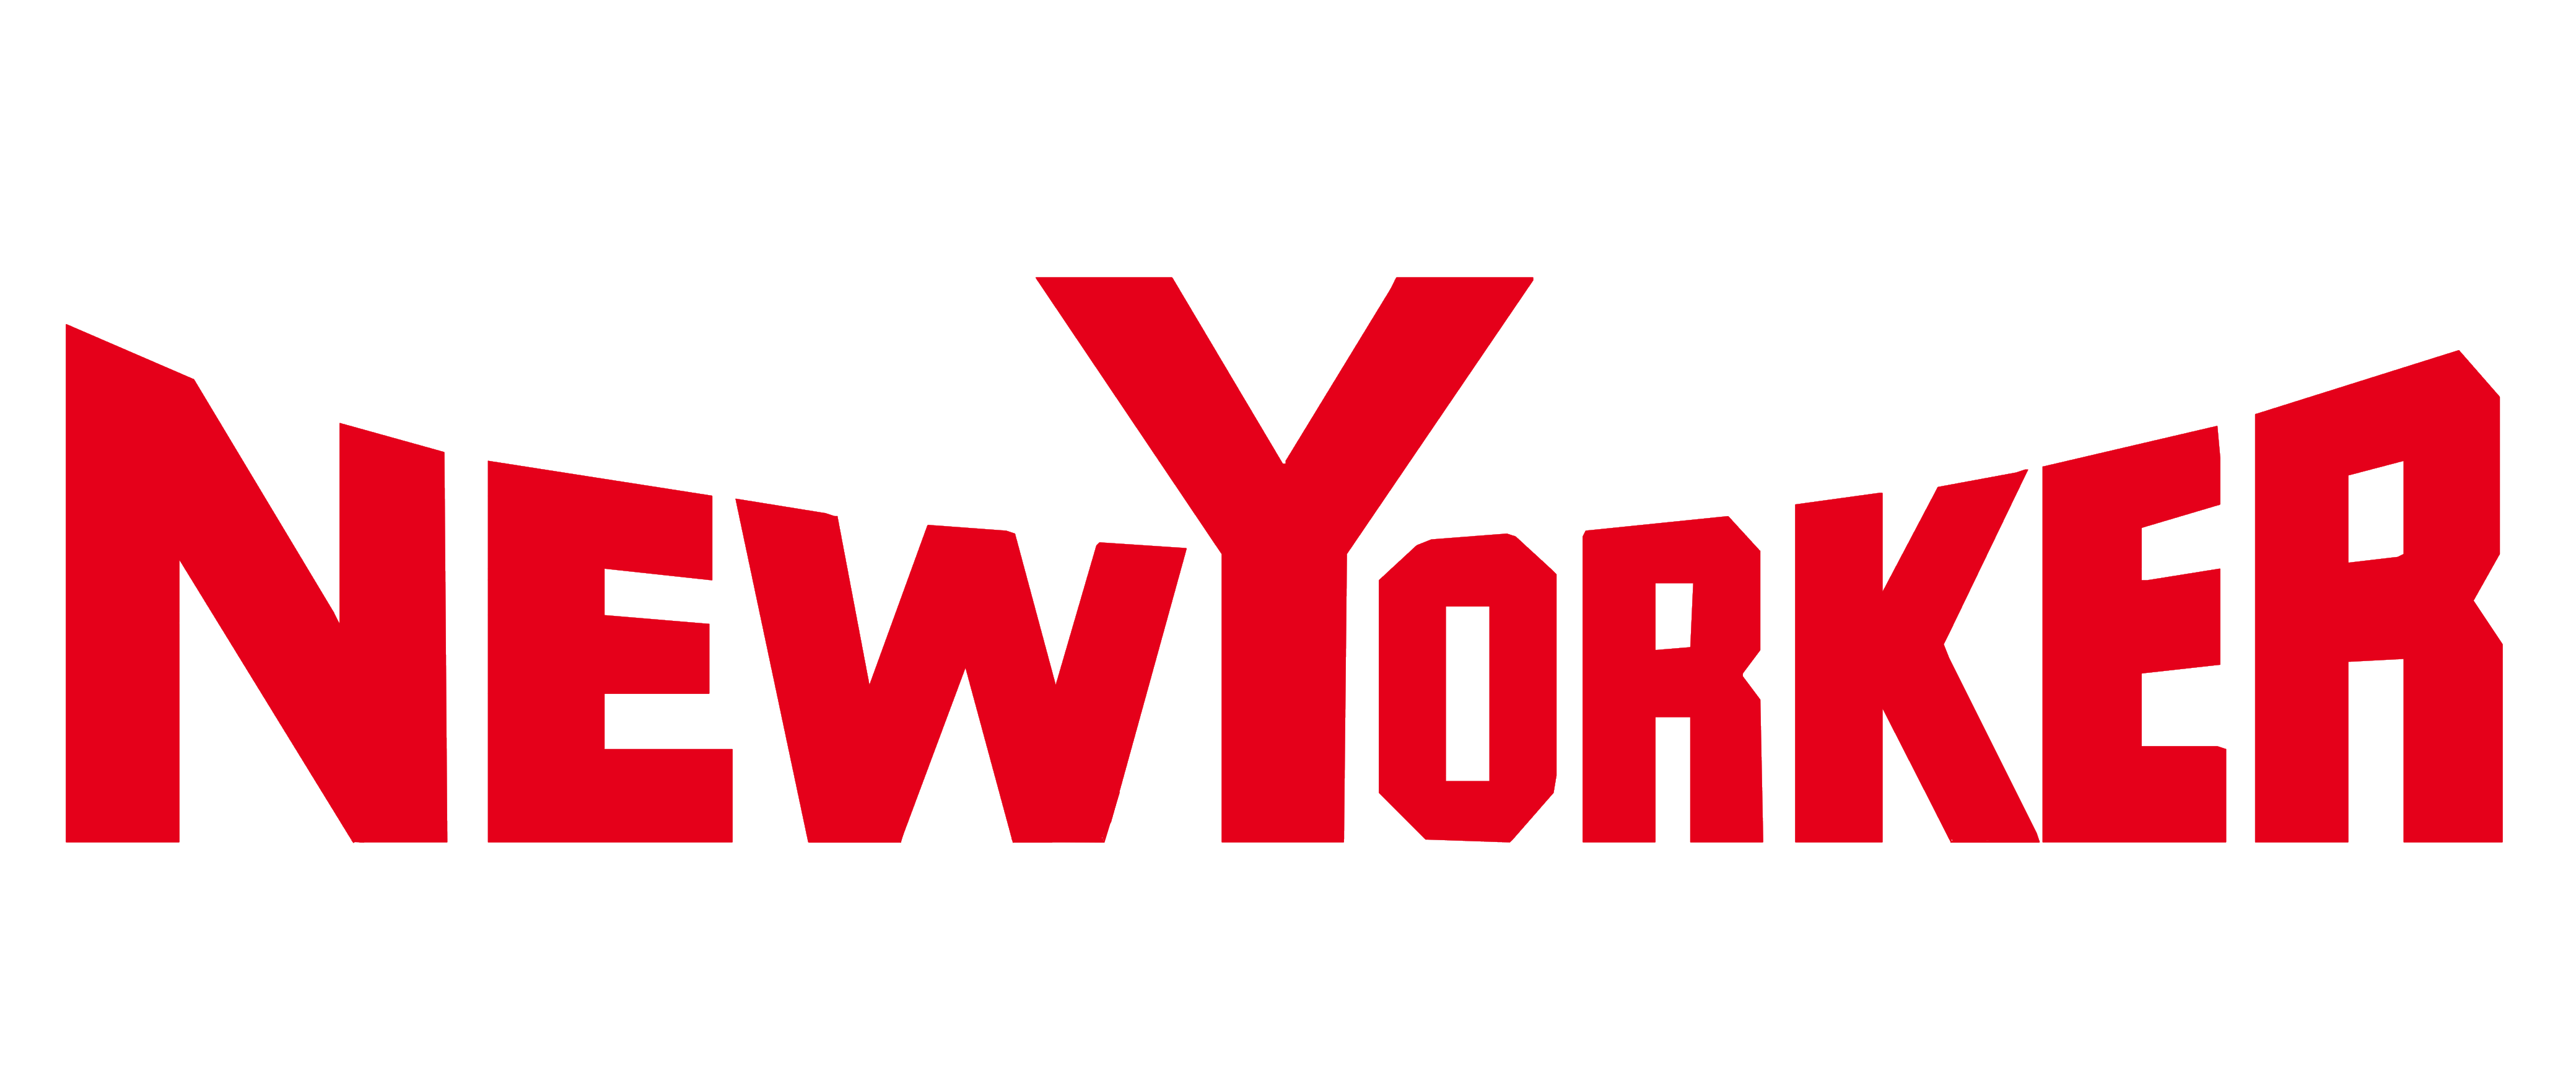 New Yorker logo, logotype